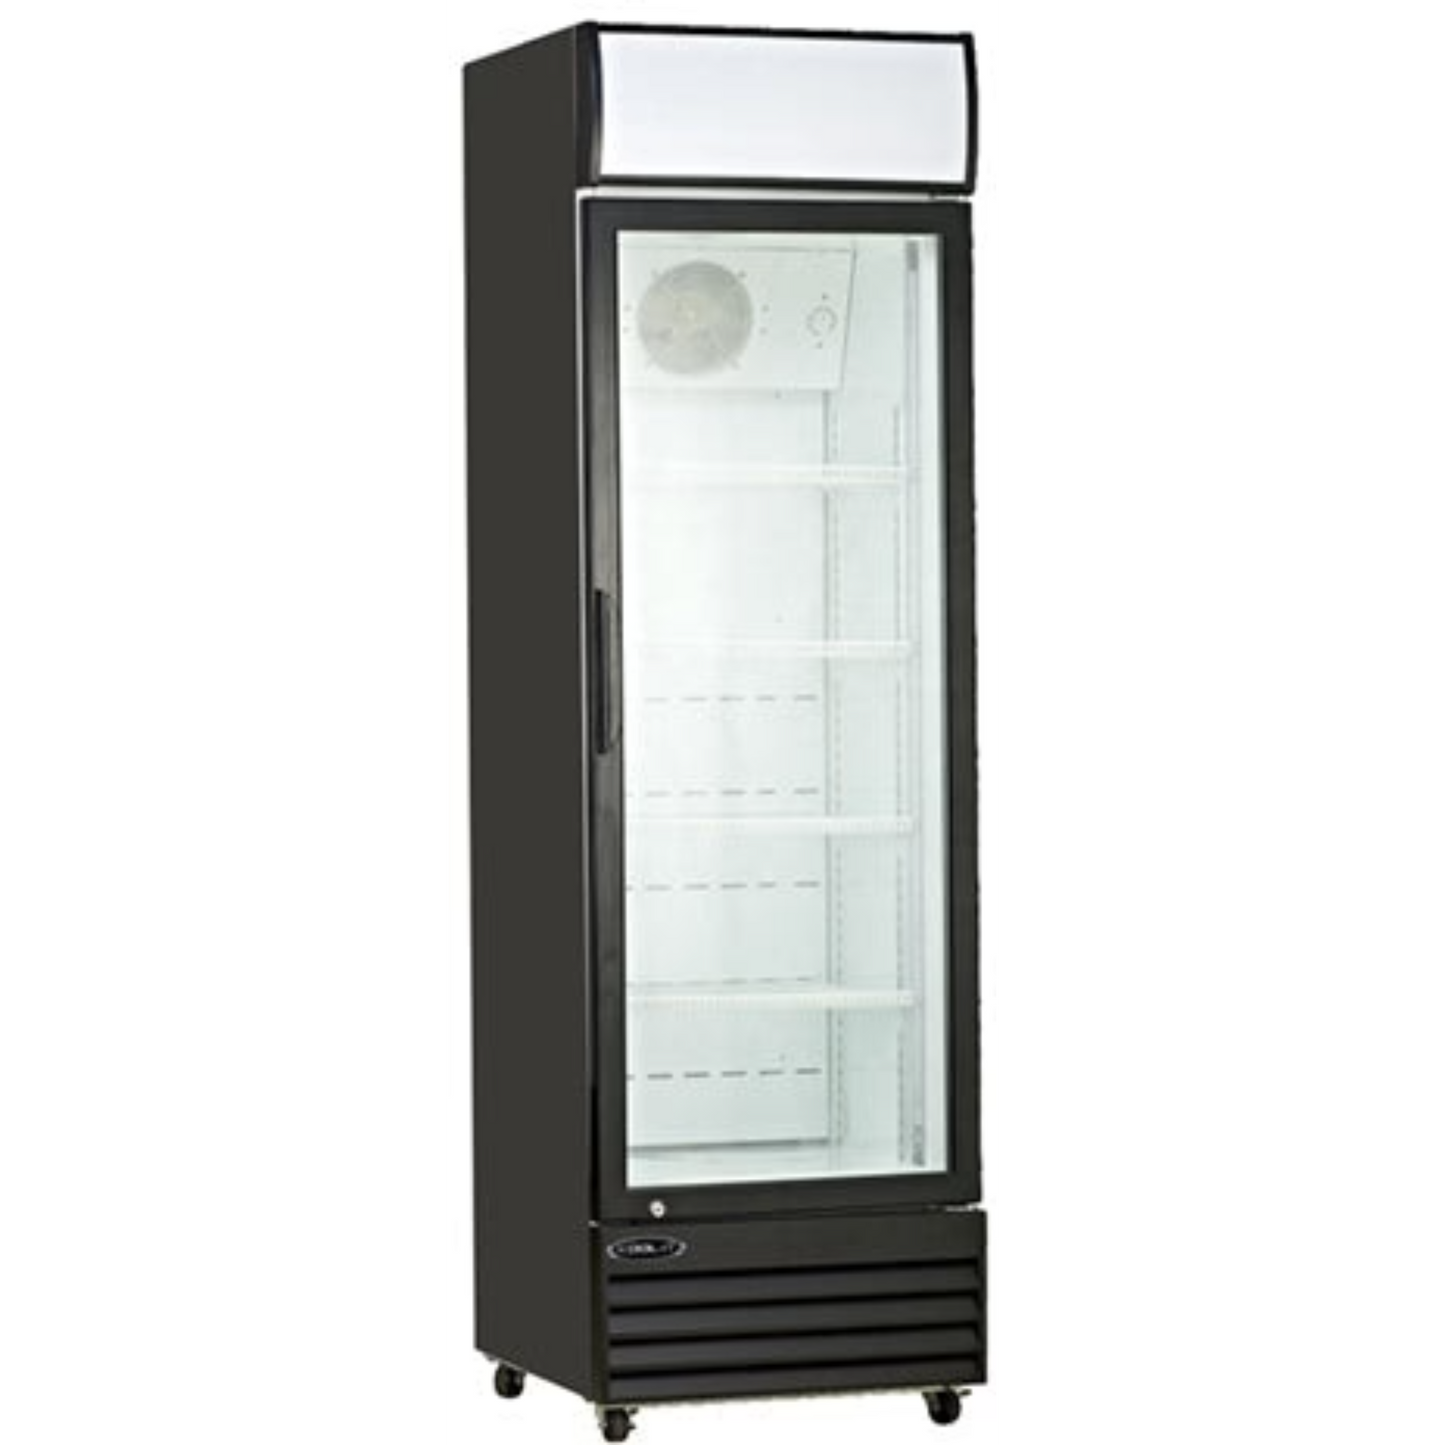 Kool-It KGM-13 23" Single Swing Glass Door Merchandiser Refrigerator